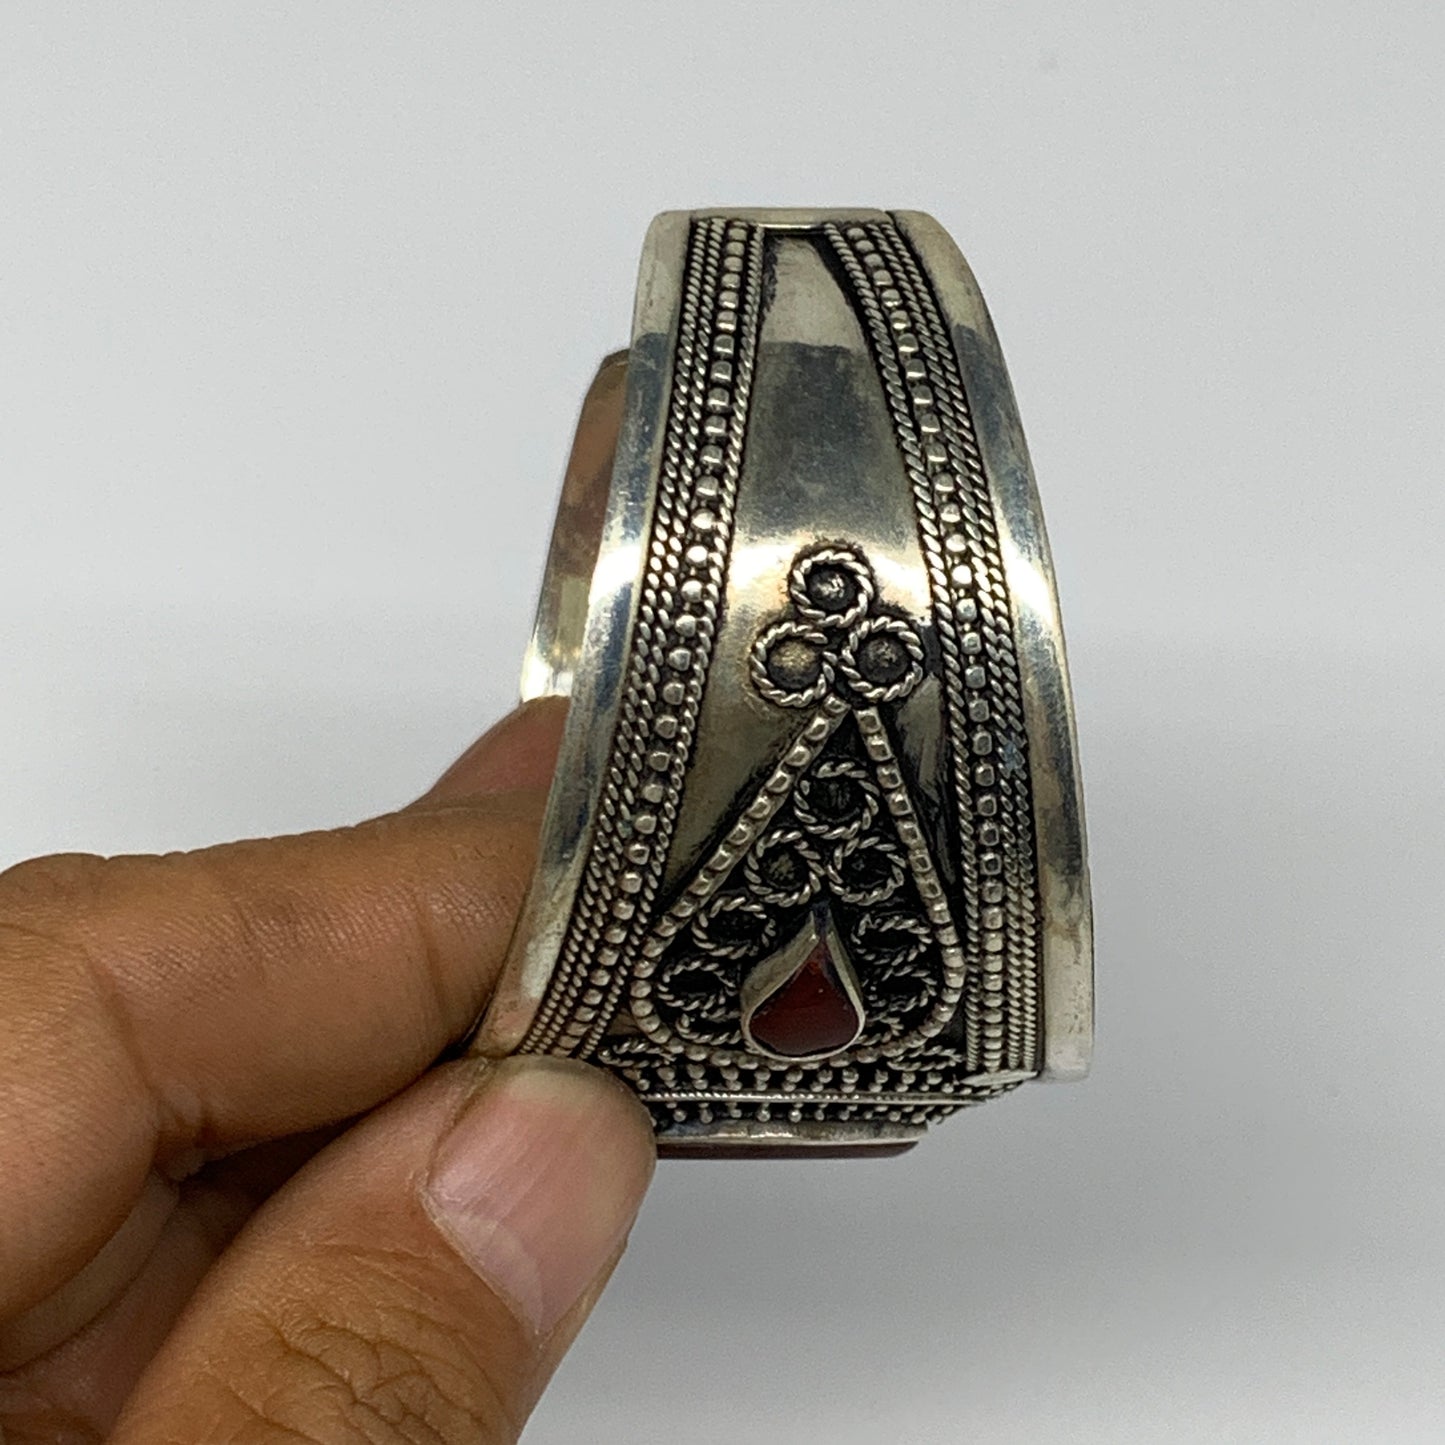 32.5g, 1.6" Red Carnelian Turkmen Cuff Bracelet Tribal Small Marquise, B13445